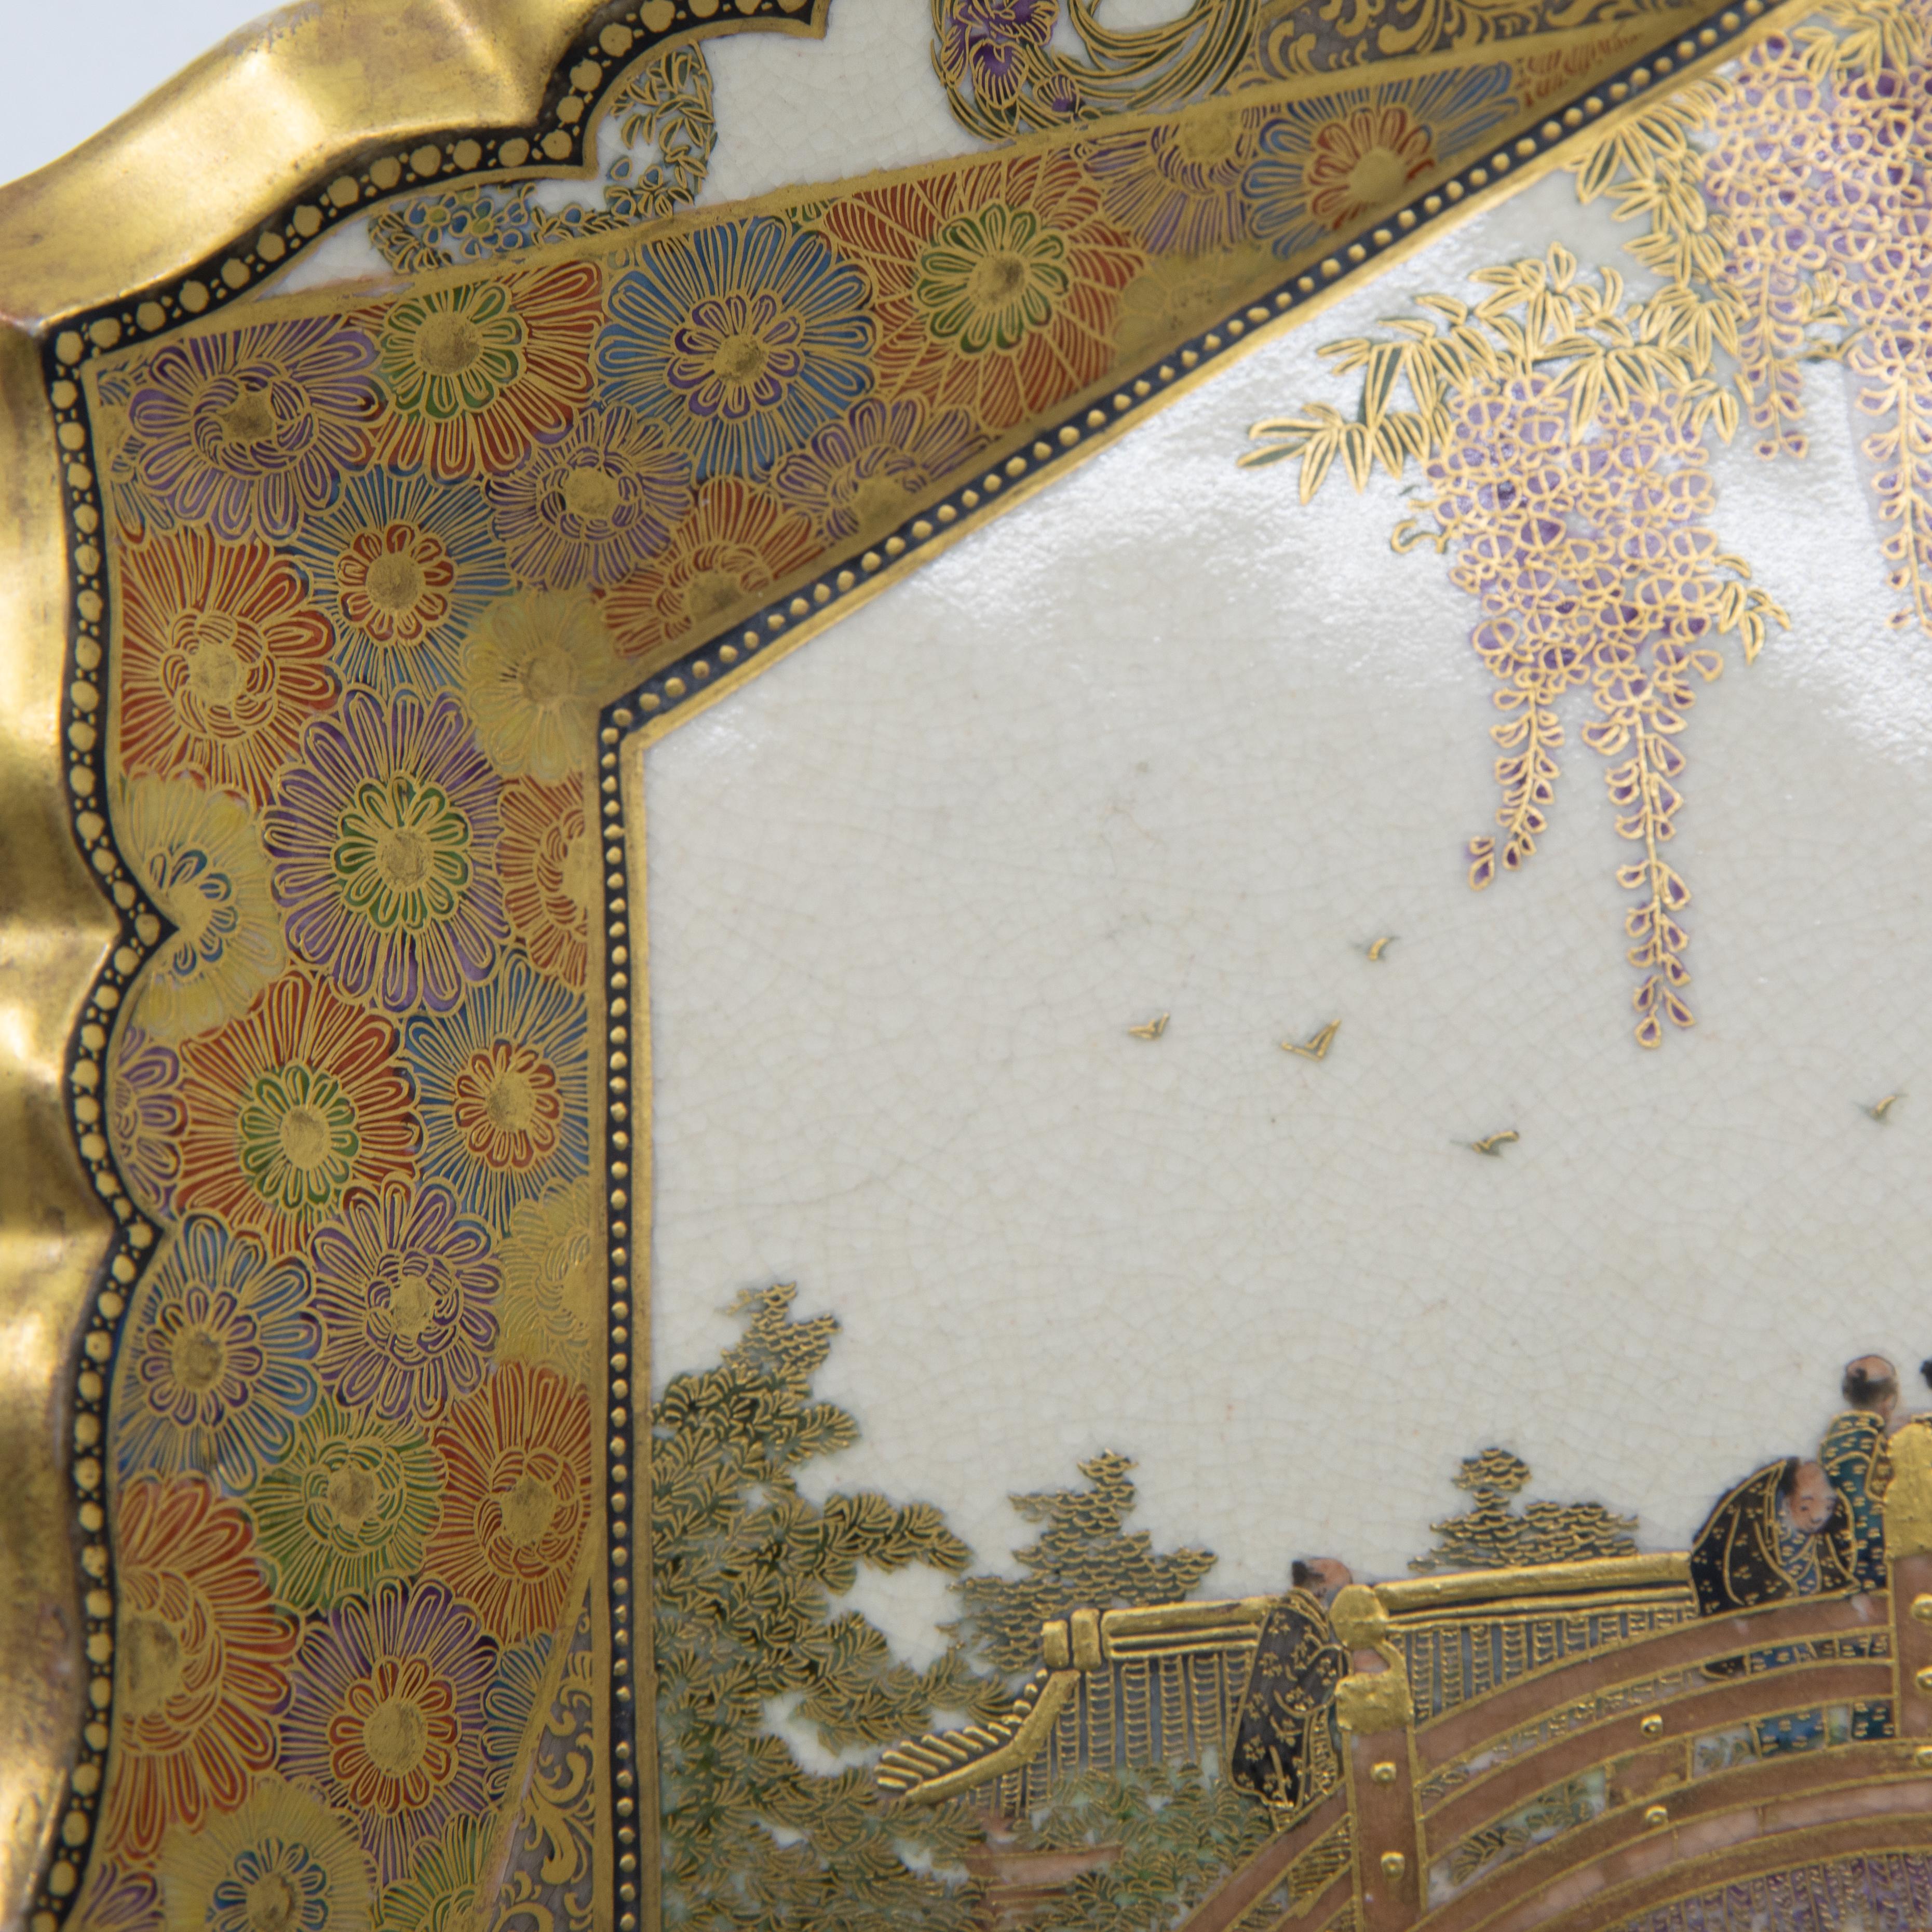 Hand-Painted Late Meiji Period Hozan Signed Satsuma Charger